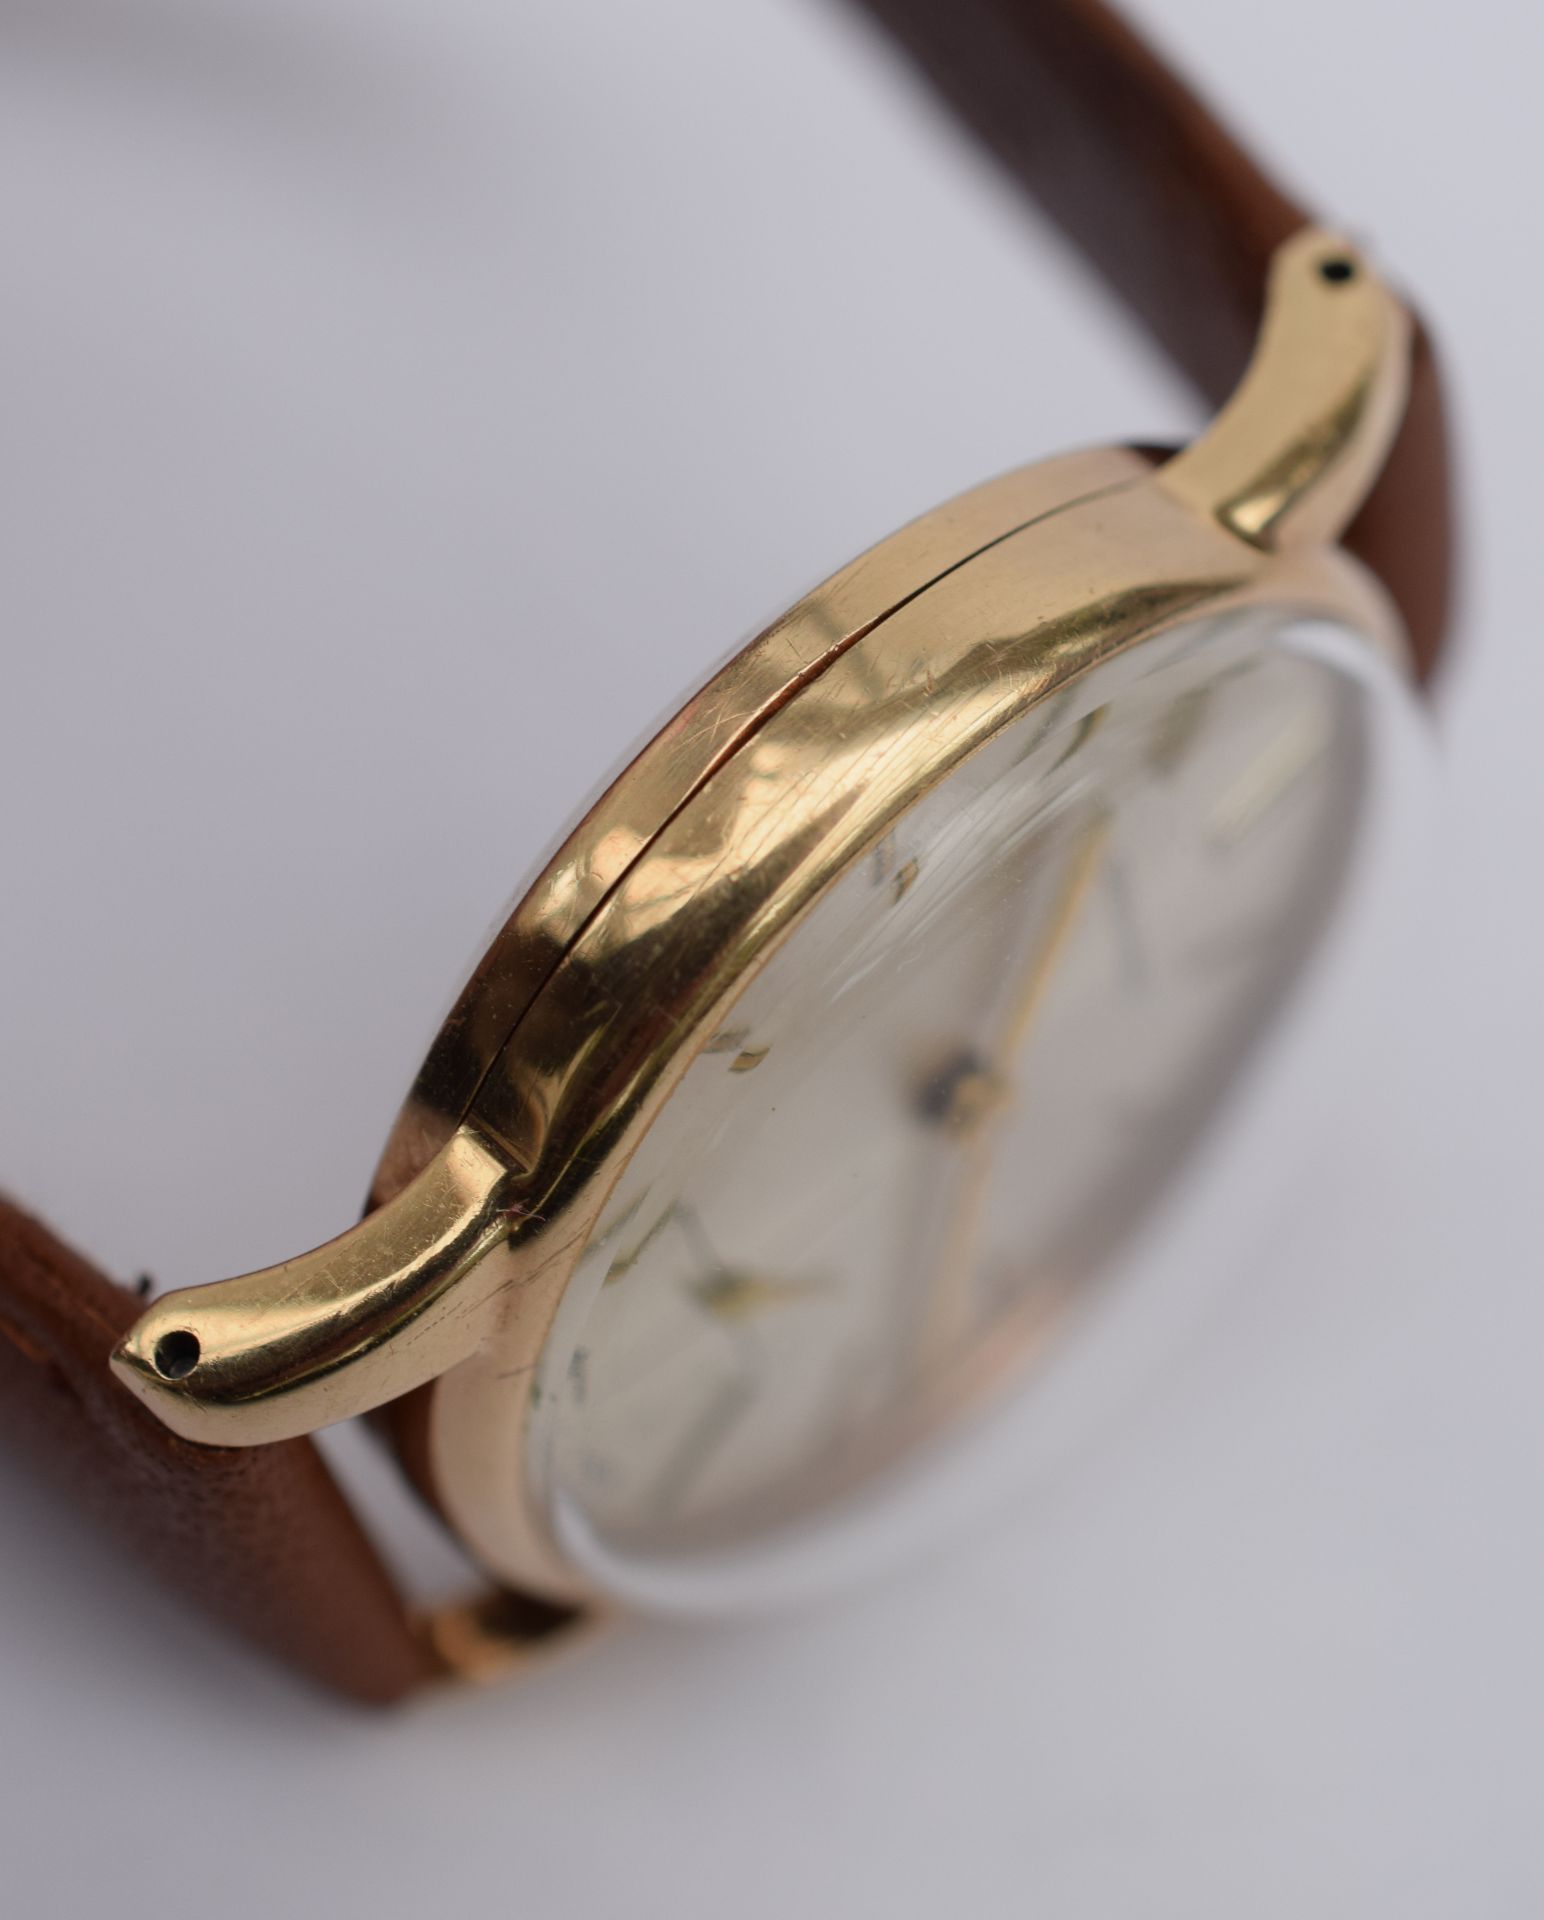 9ct Gold Garrard Gentleman's Manual Wind Wristwatch - Image 7 of 9